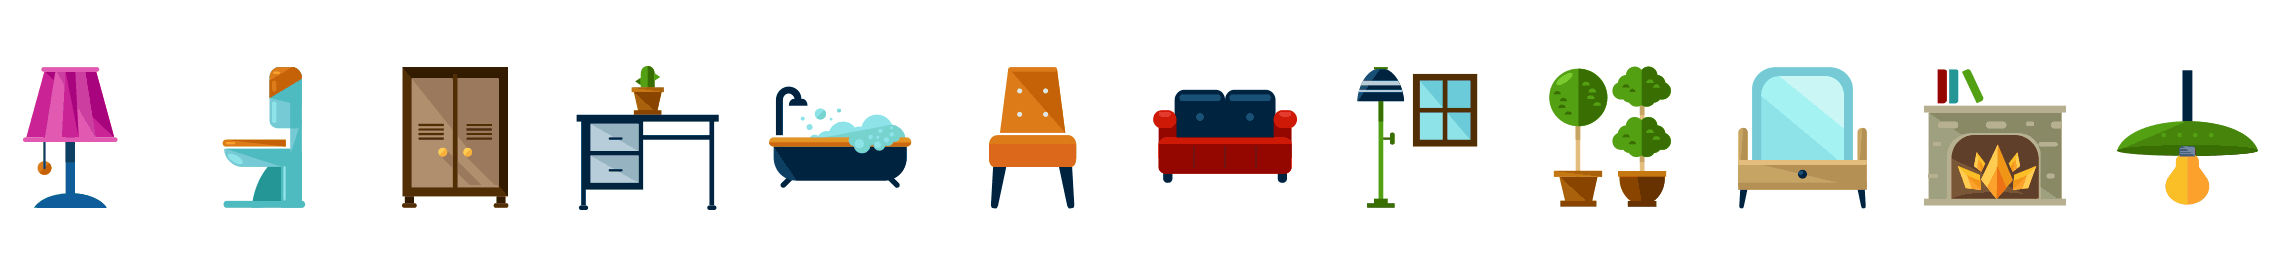 Furniture-flat-icons